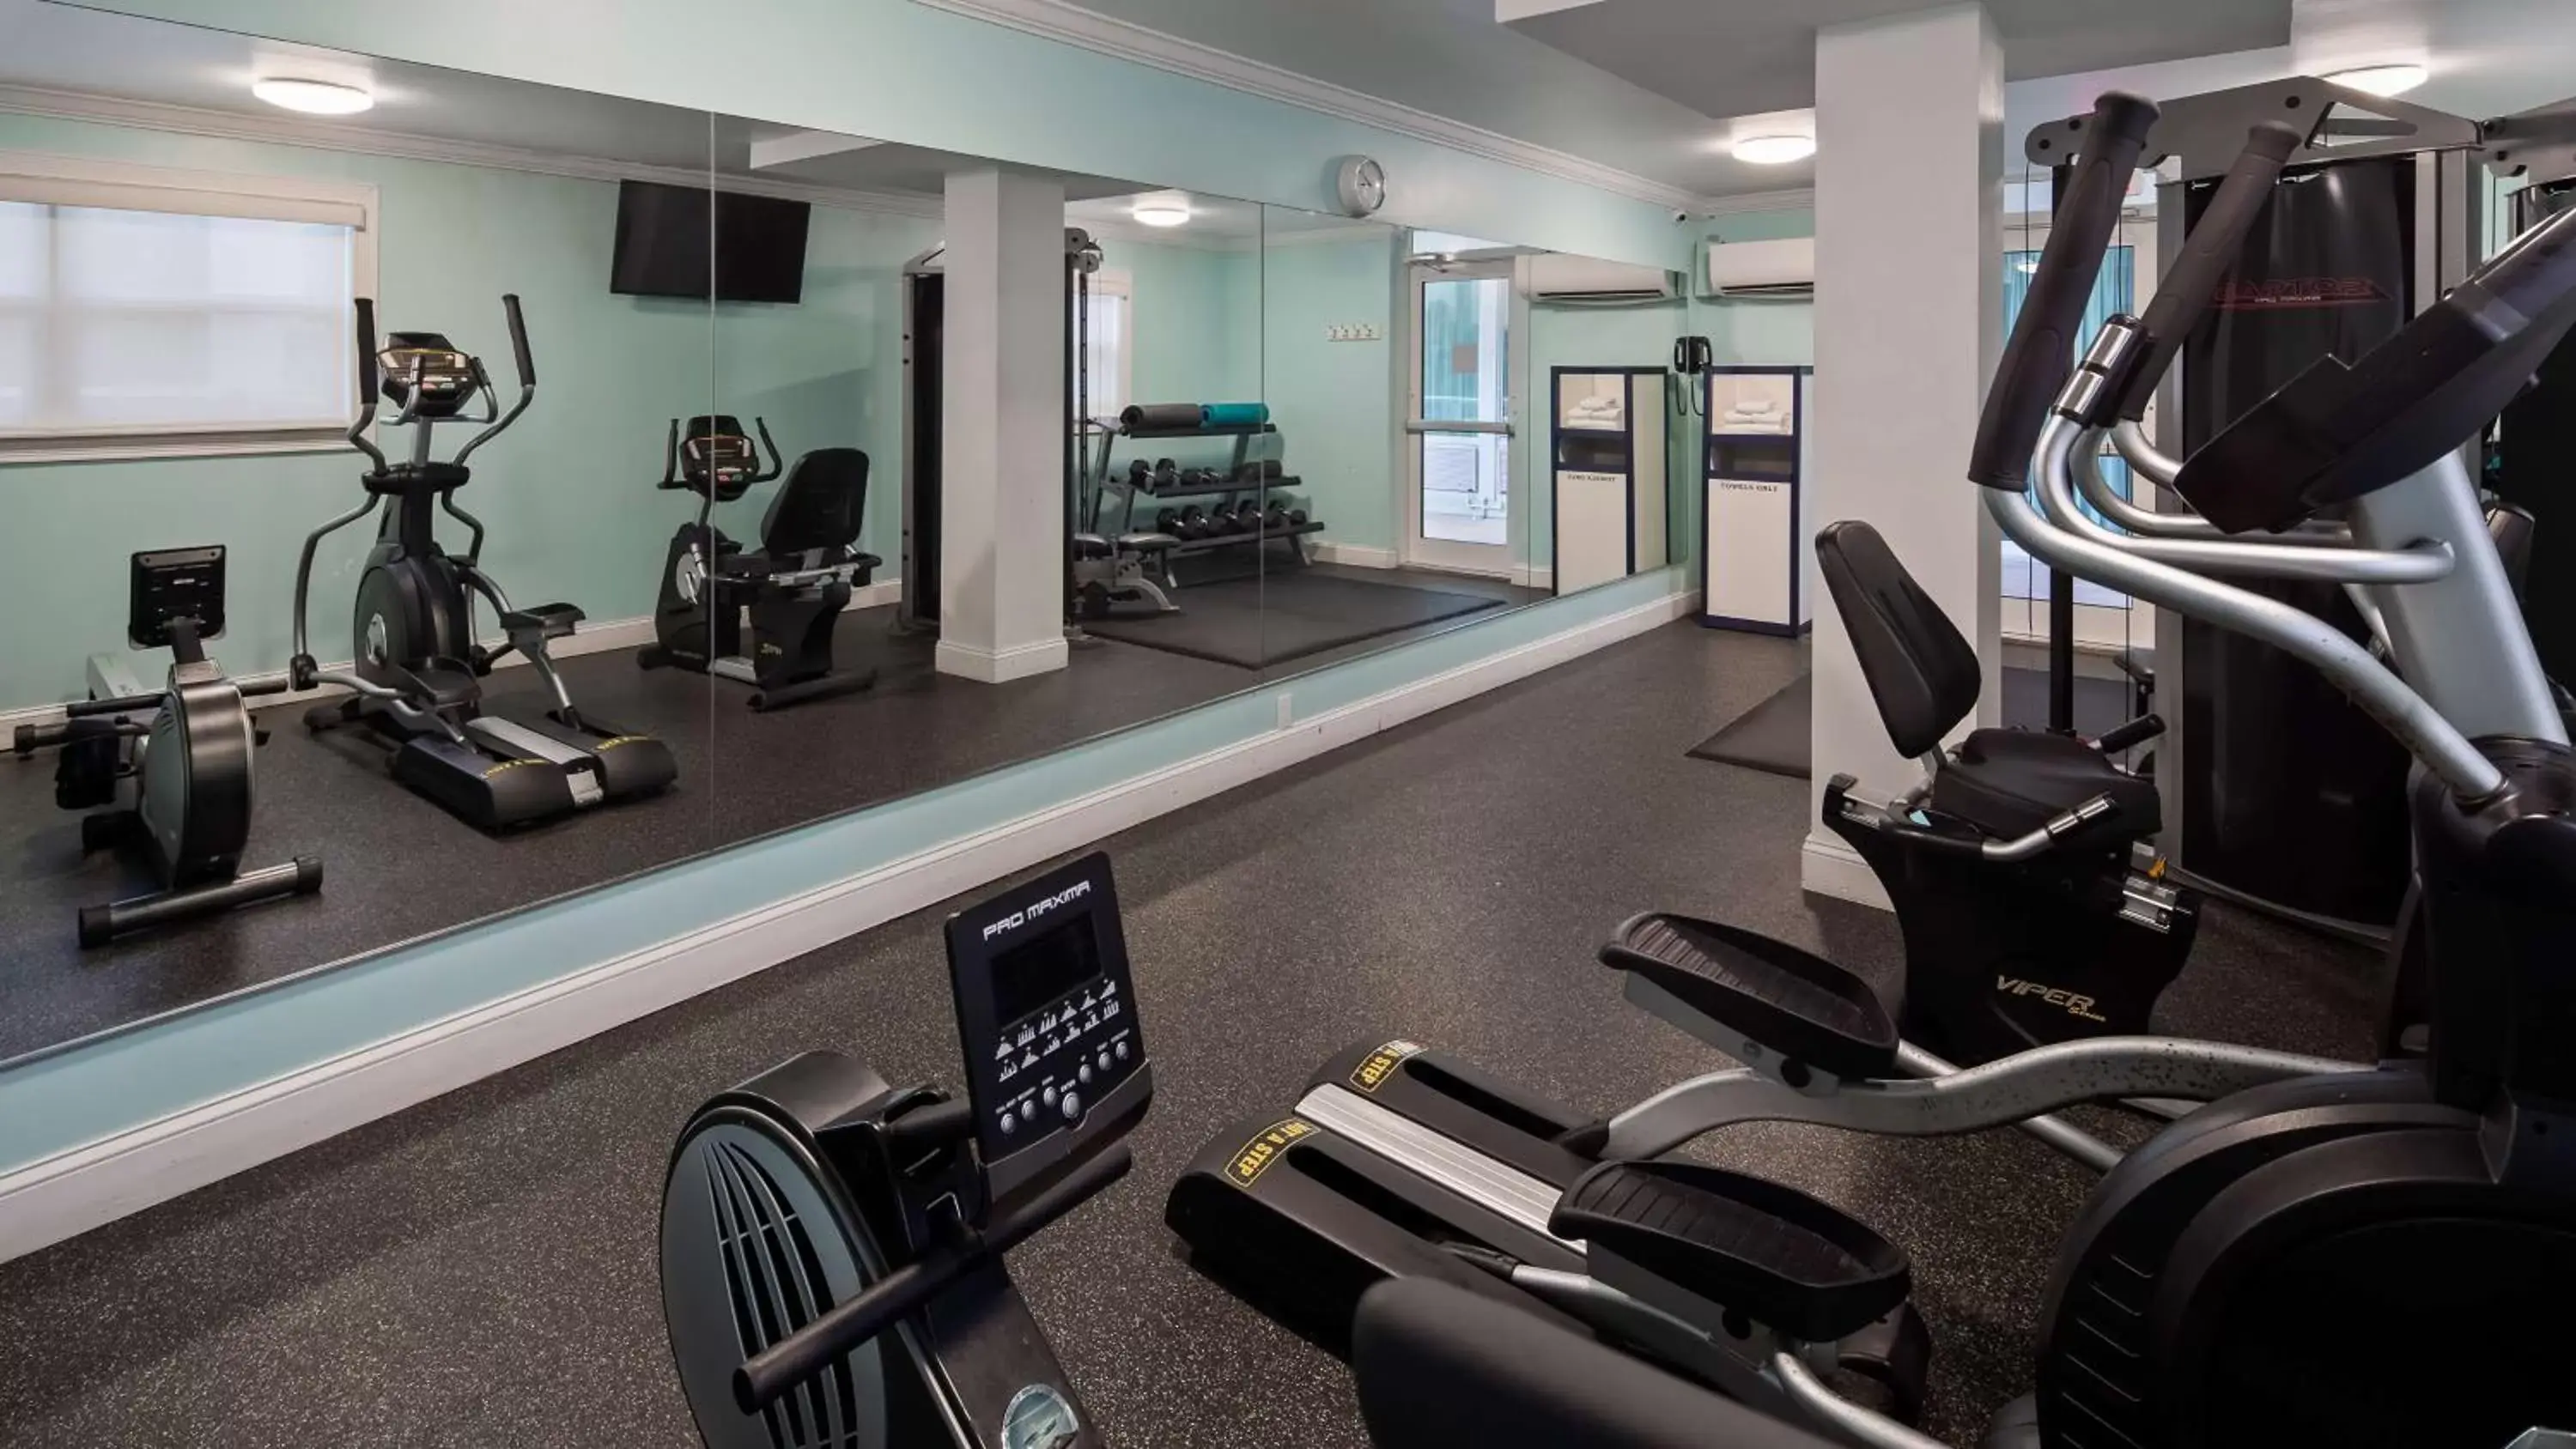 Fitness centre/facilities, Fitness Center/Facilities in Best Western Plus Oceanside Inn